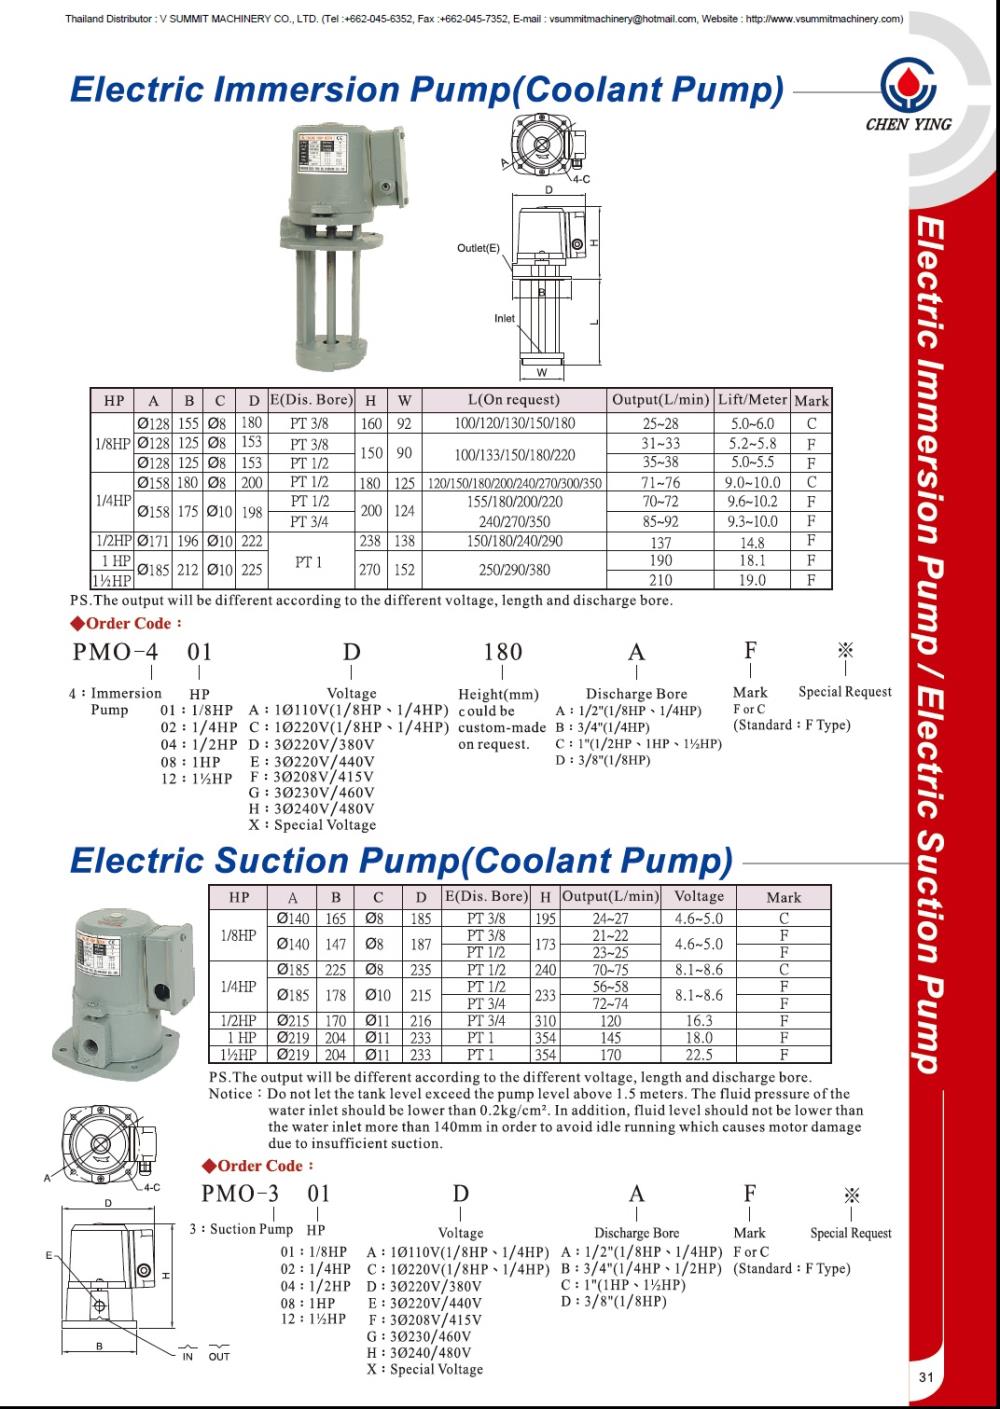 Electric Suction Pump(Coolant Pump), คูลแลนท์ปั๊ม, คูลลิ่งปั๊ม, cooling pump, ปั๊มหล่อเย็น, ปั๊มน้ำยาหล่อเย็น, ปั๊มหล่อเย็นมีขา, ปั๊มหล่อเย็นมีก้าน, ปั๊มหล่อเย็นแบบจุ่ม, ปั๊มหล่อเย็นขาจุ่ม